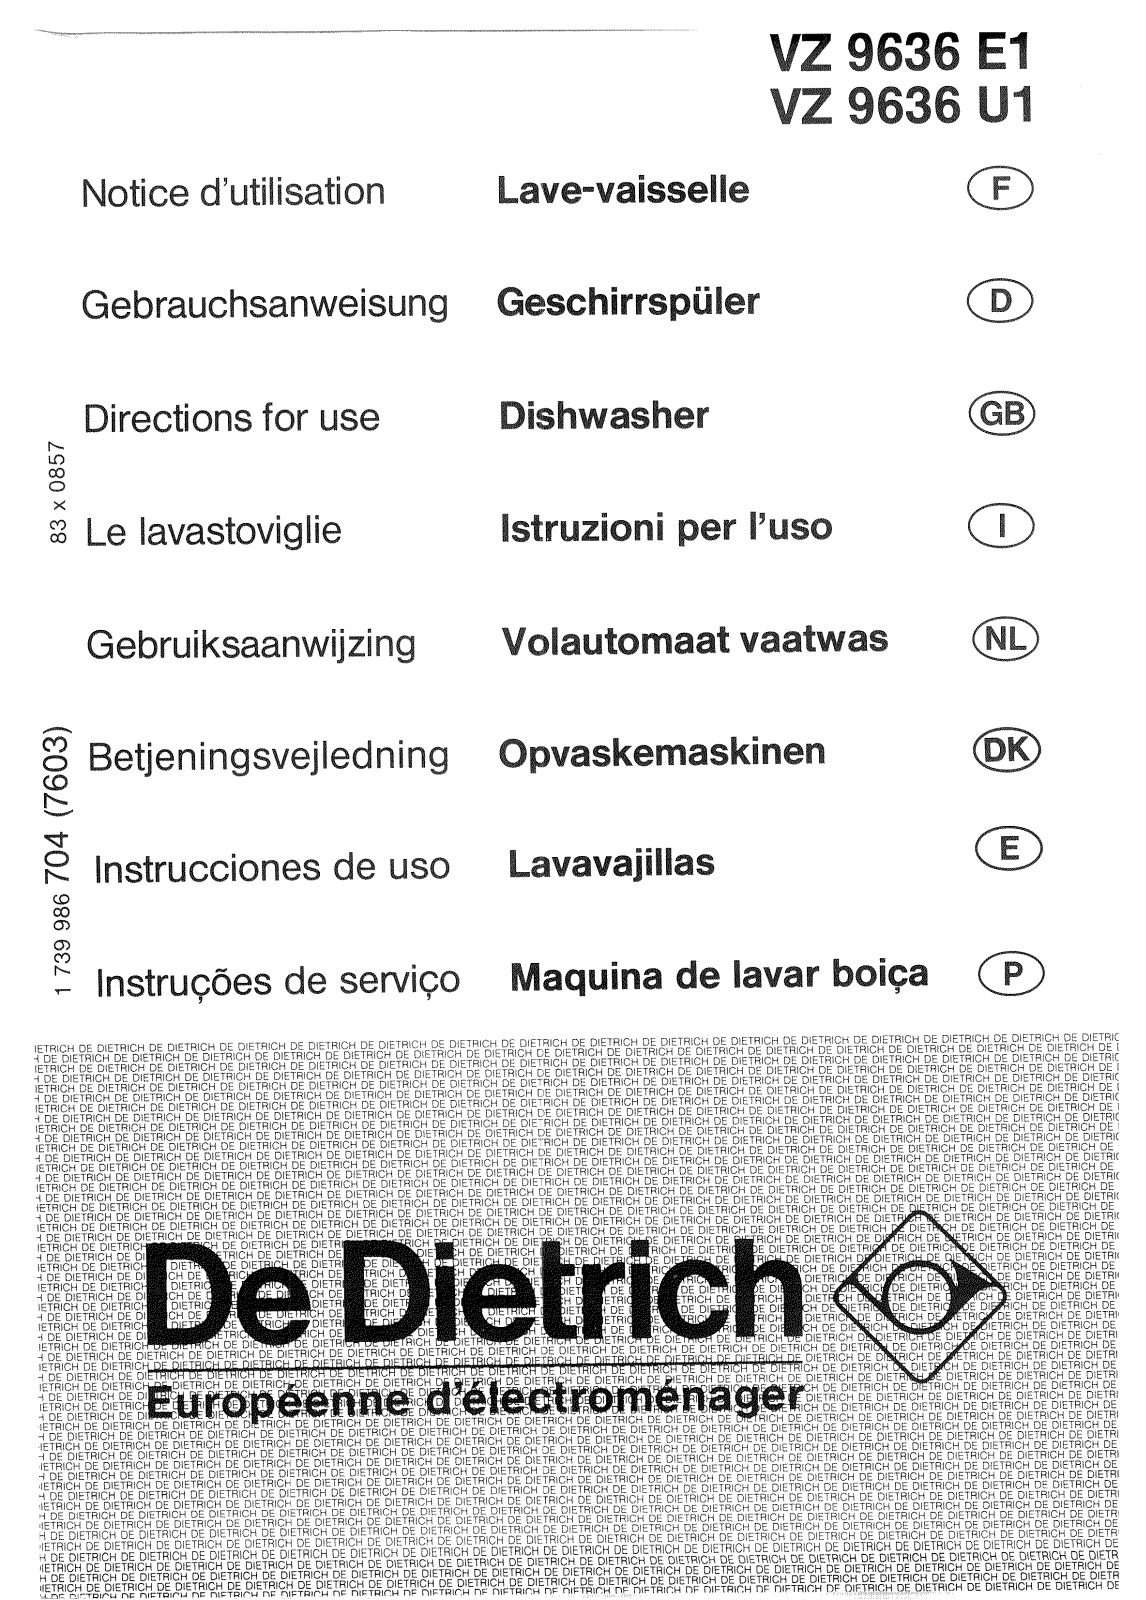 De dietrich VZ9636U1, VZ9636E1 User Manual